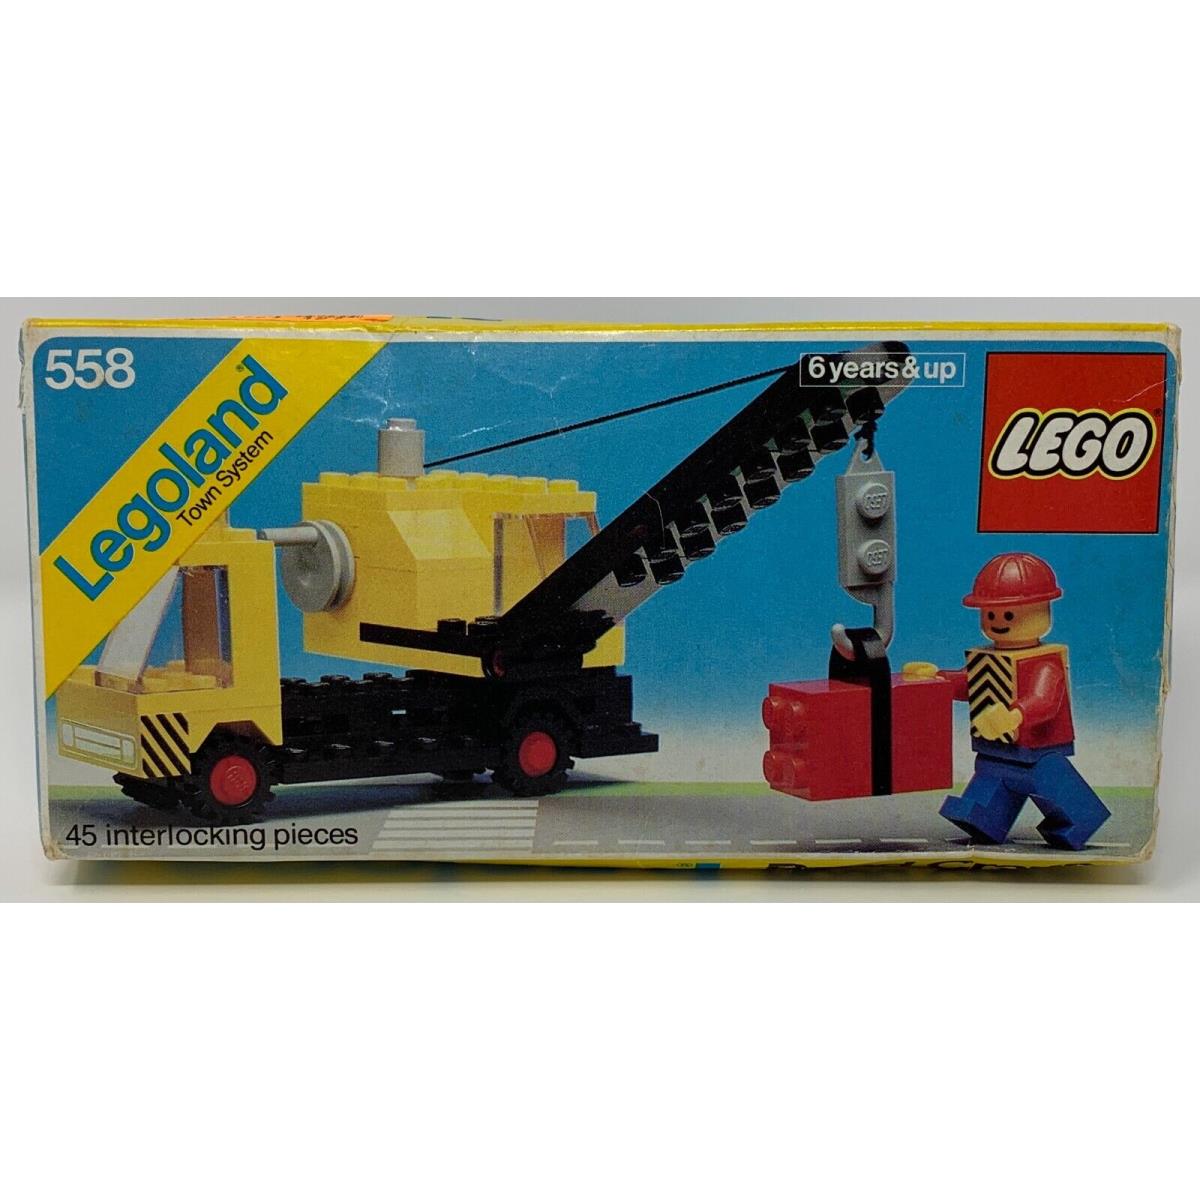 Lego 558 Road Crane 1979